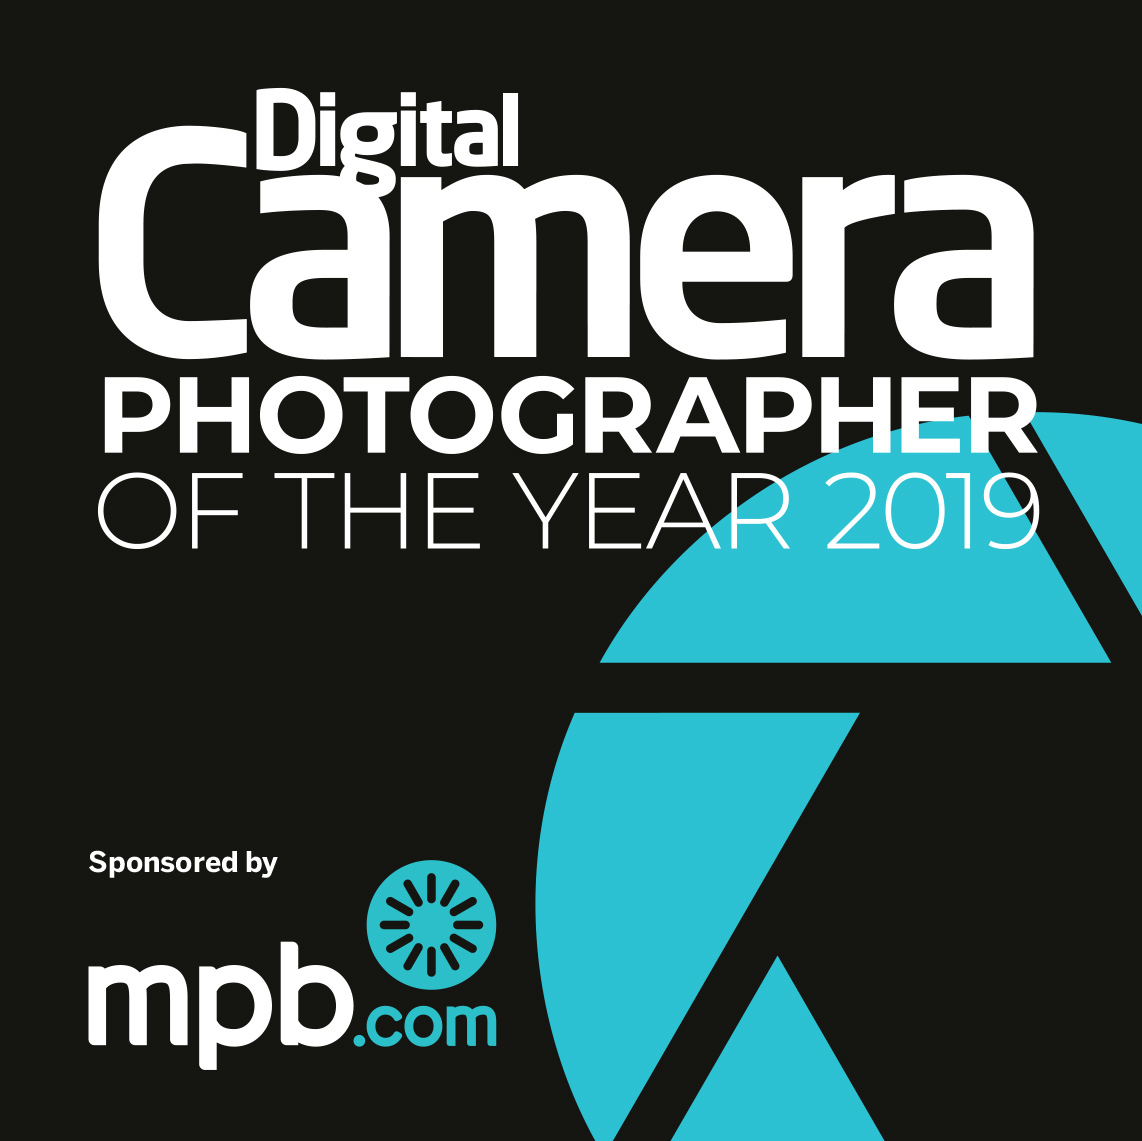 Digital Camera Photographer of the Year 2019 - logo